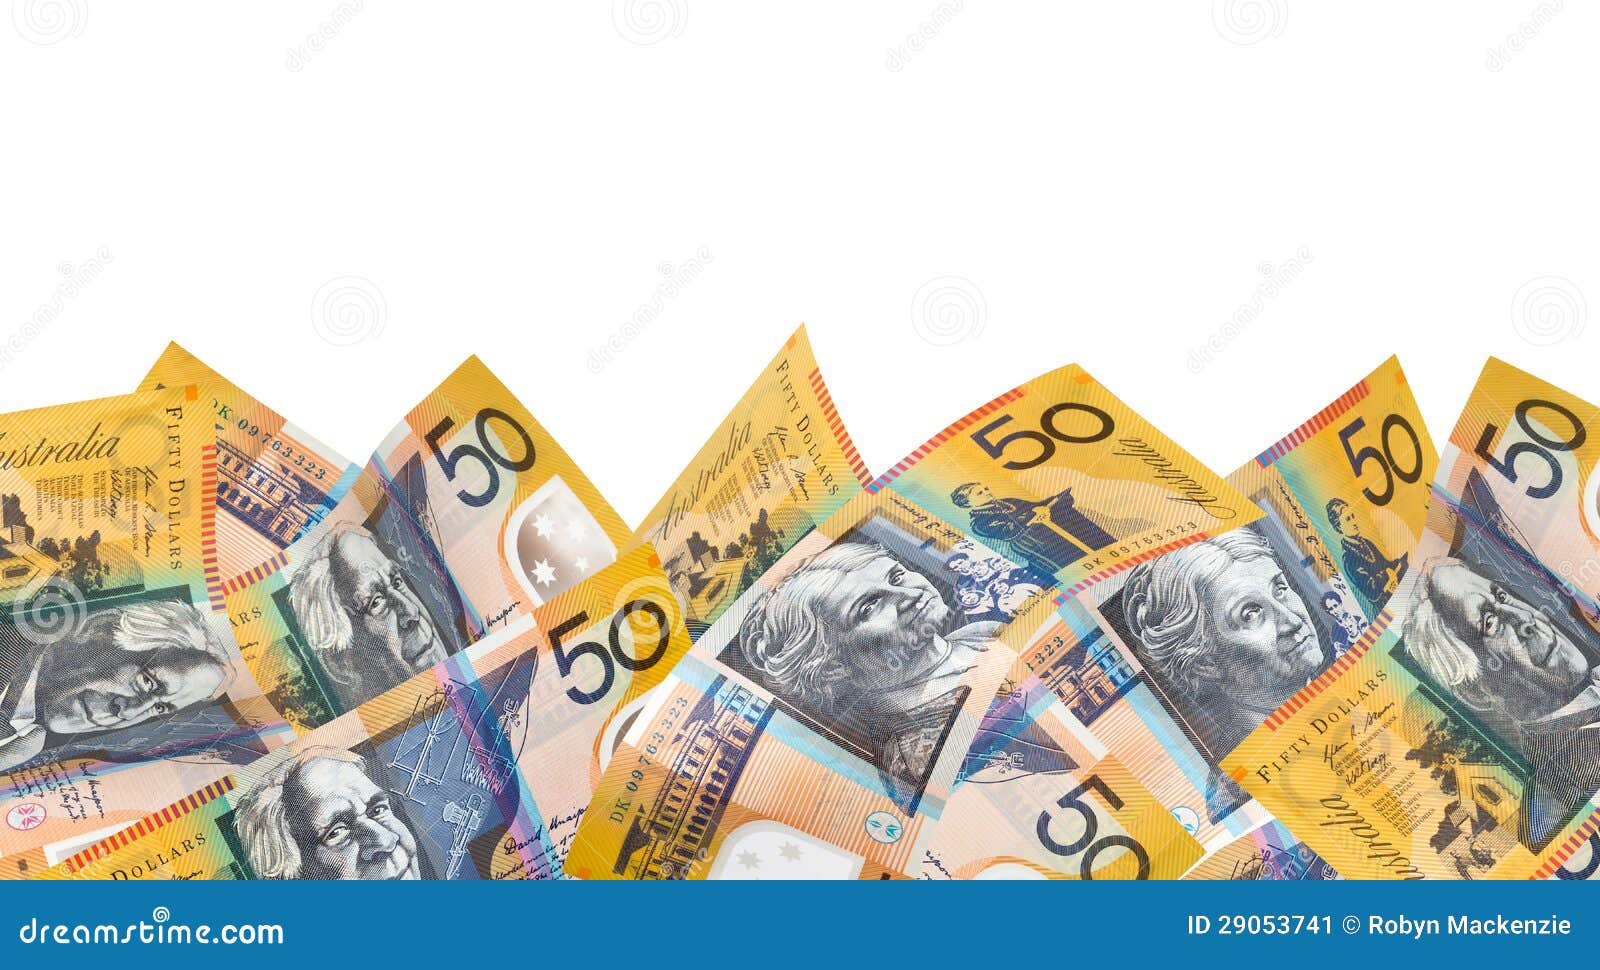 australian money clipart free - photo #4